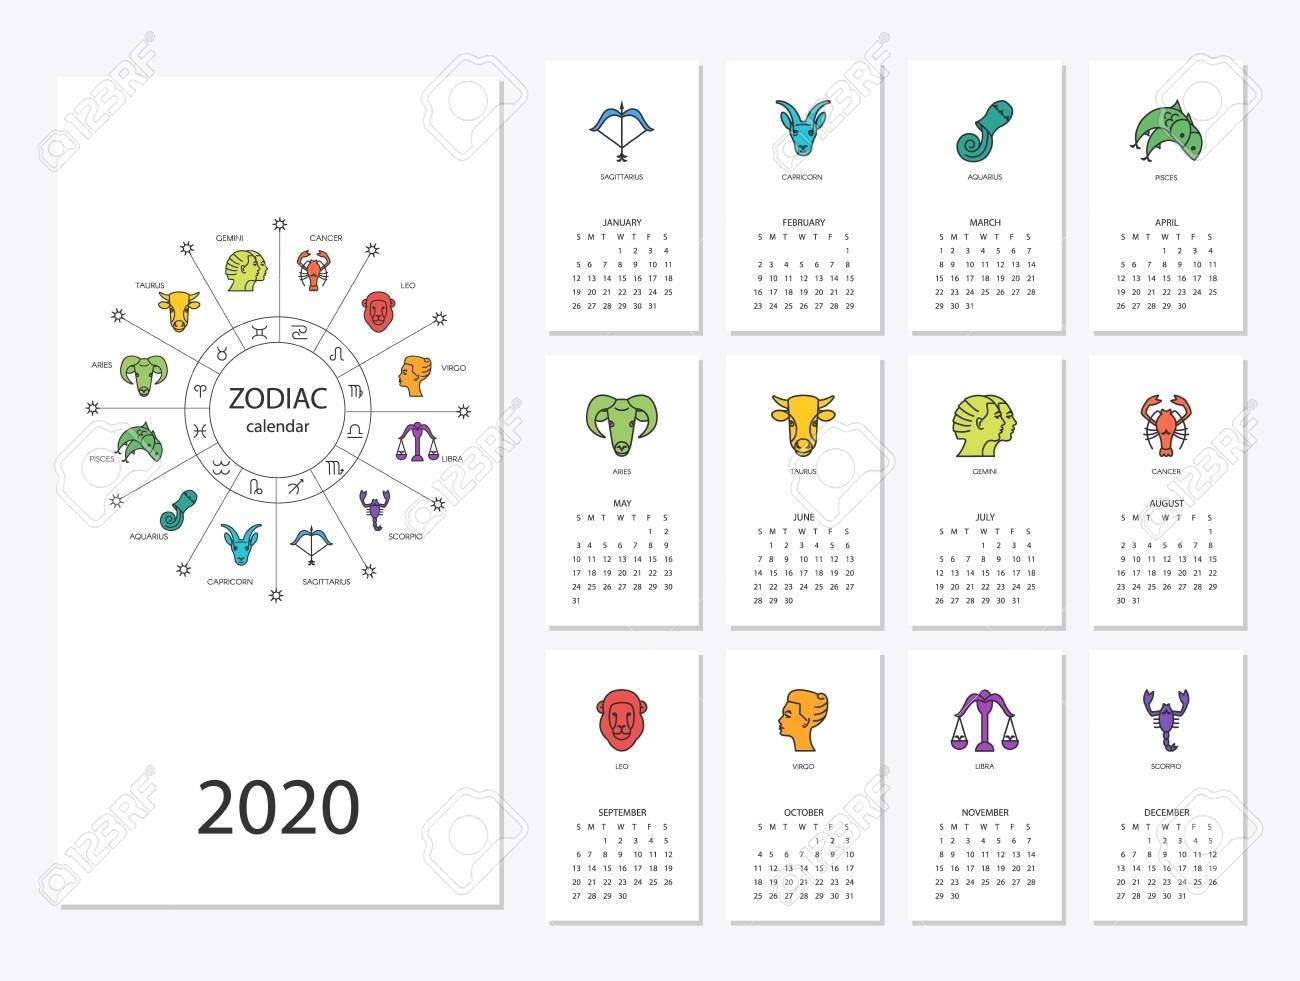 Calendar 2020 With Horoscope Signs Zodiac Symbols Set Calendar Of Zodiac Signs